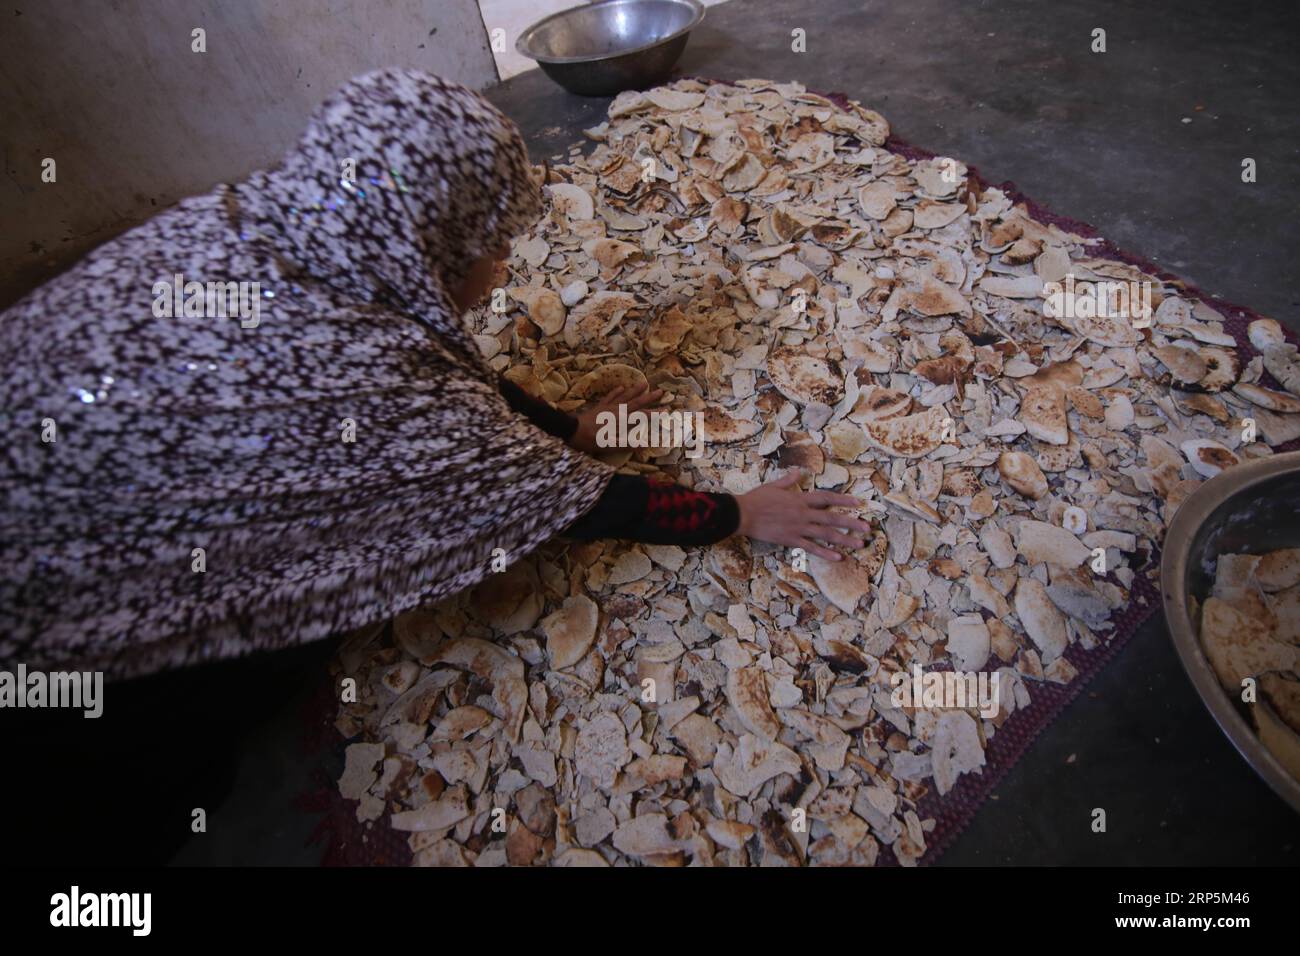 (181218) -- GAZA, Dec. 18, 2018 -- Palestinian woman Fayrouz al-A raj, 45, dries bread remains inside her house, in the southern Gaza Strip city of Khan Younis, on Dec. 18, 2018. Fayrouz al-A raj sells bread remains to livestock owners to feed their animals. ) MIDEAST-GAZA-BREAD-REMAINS KhaledxOmar PUBLICATIONxNOTxINxCHN Stock Photo